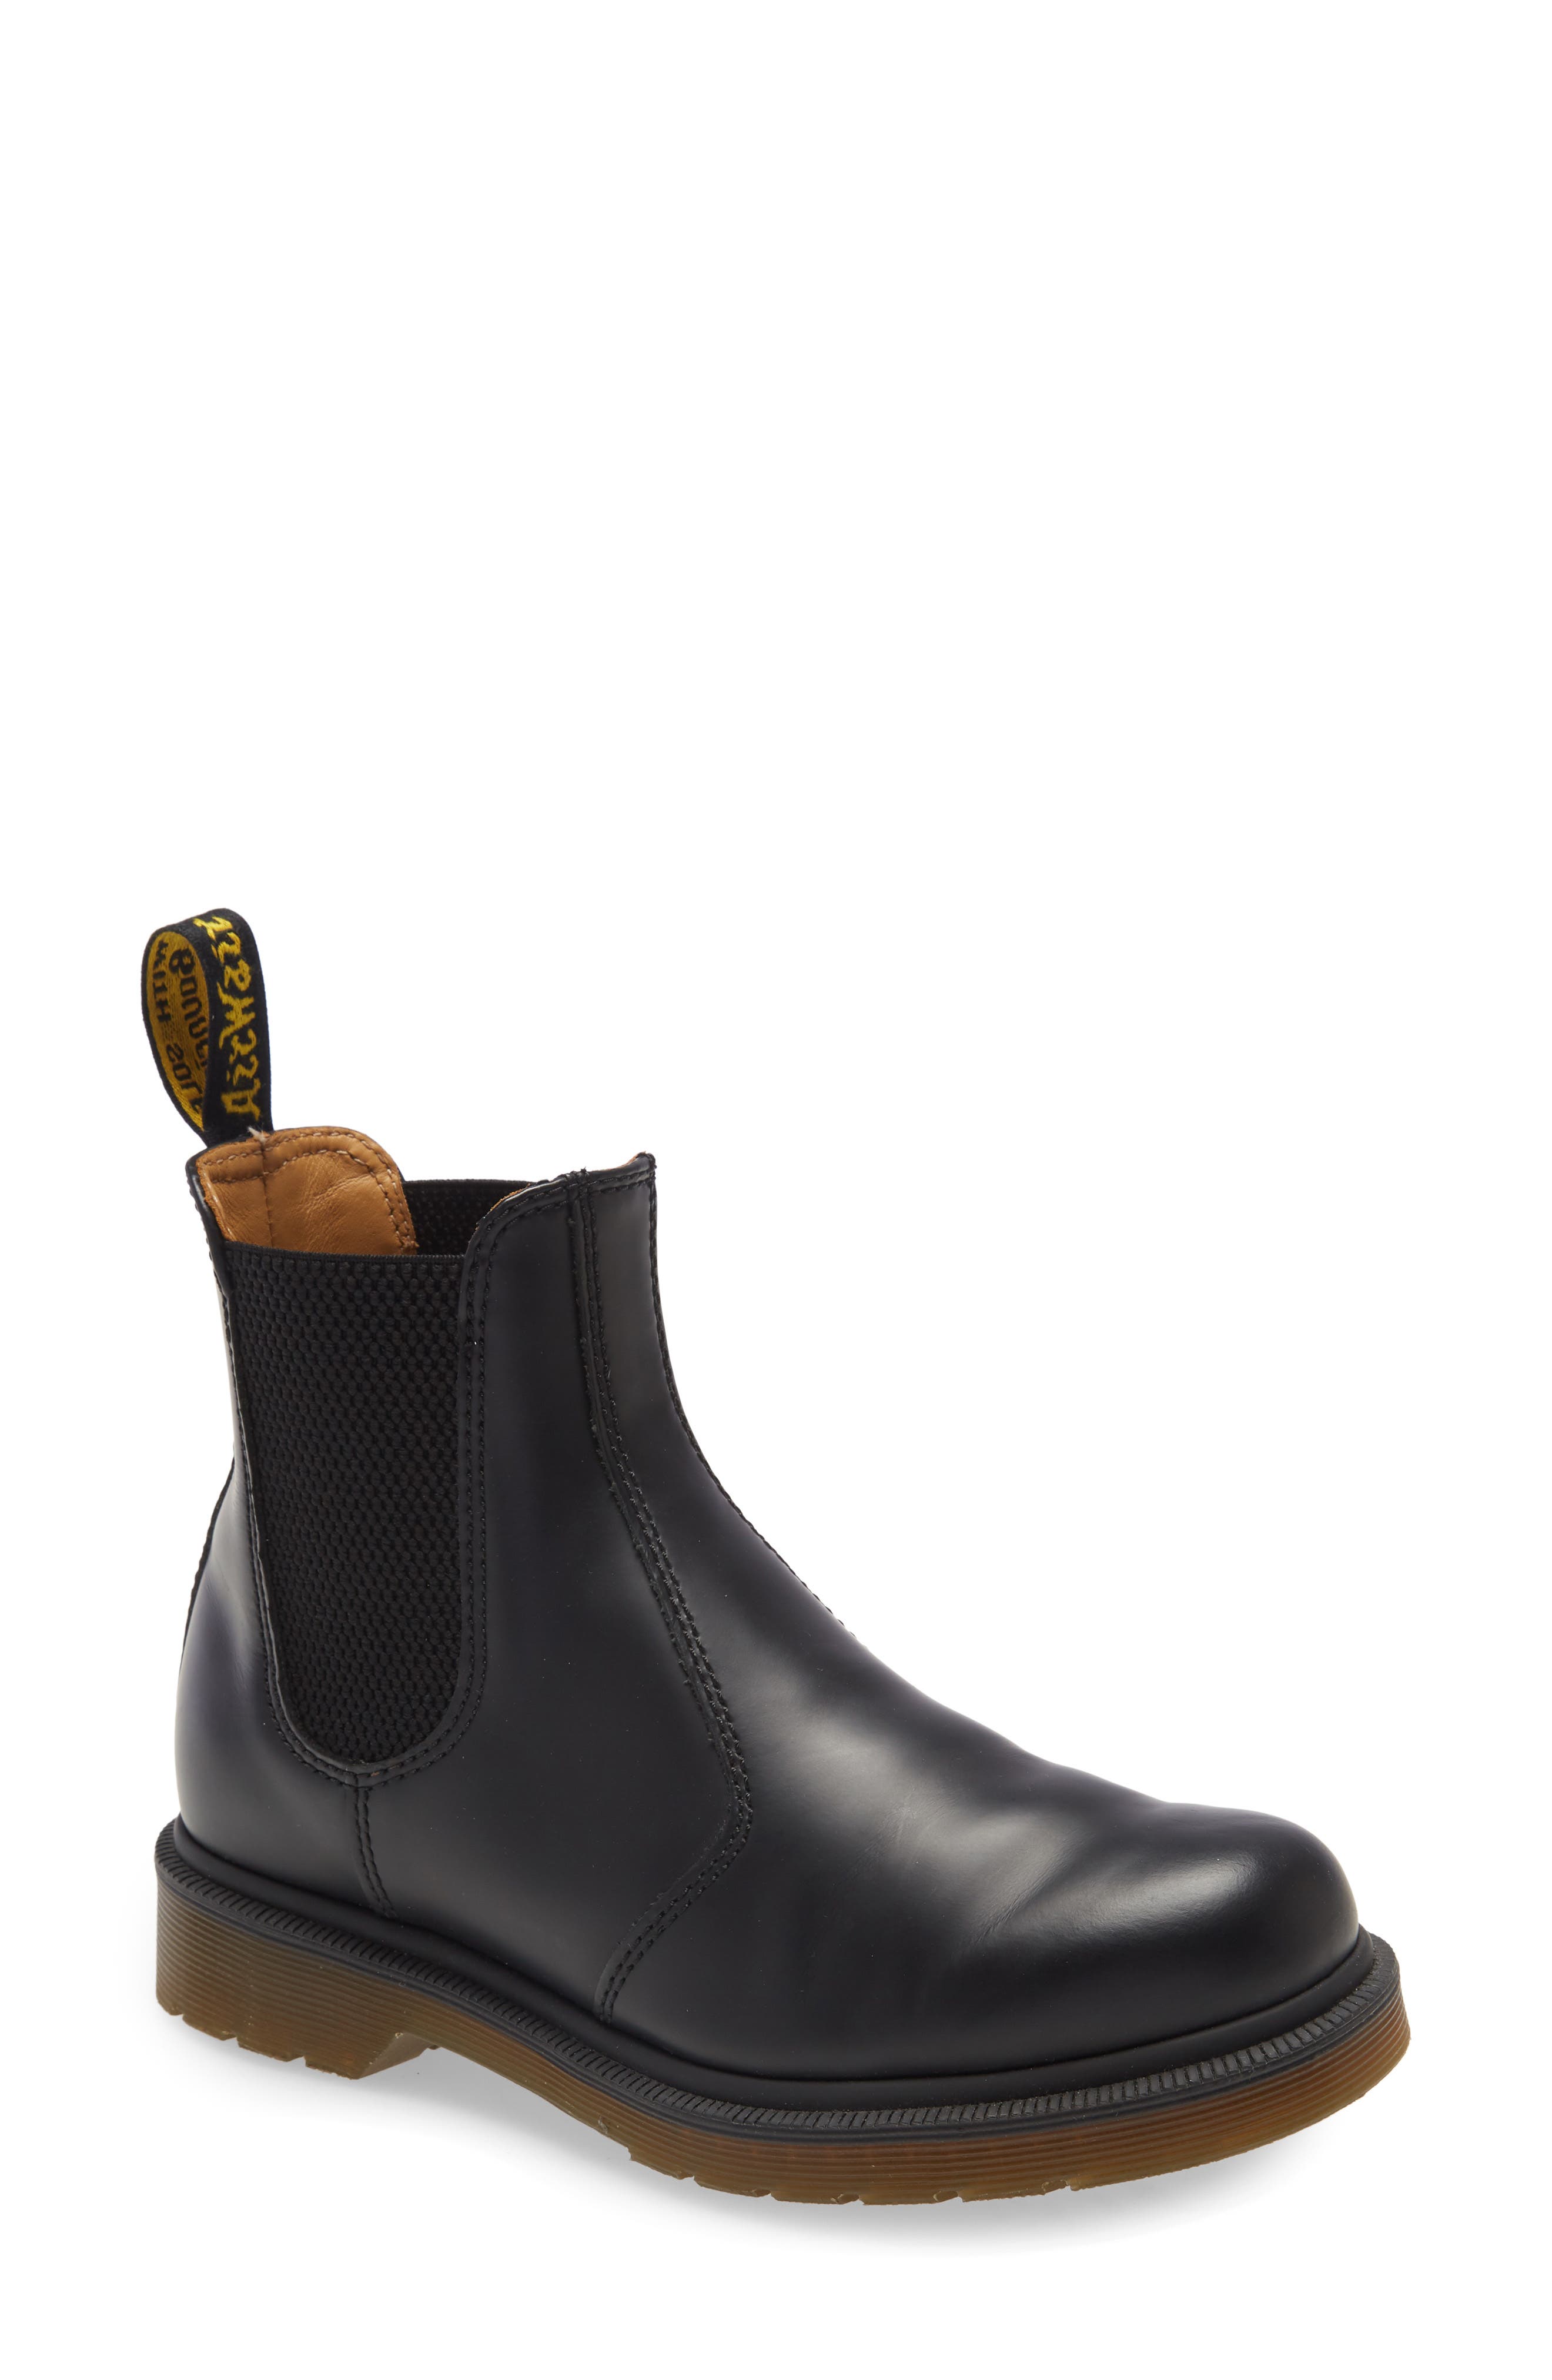 dr martens chelsea boots size 3